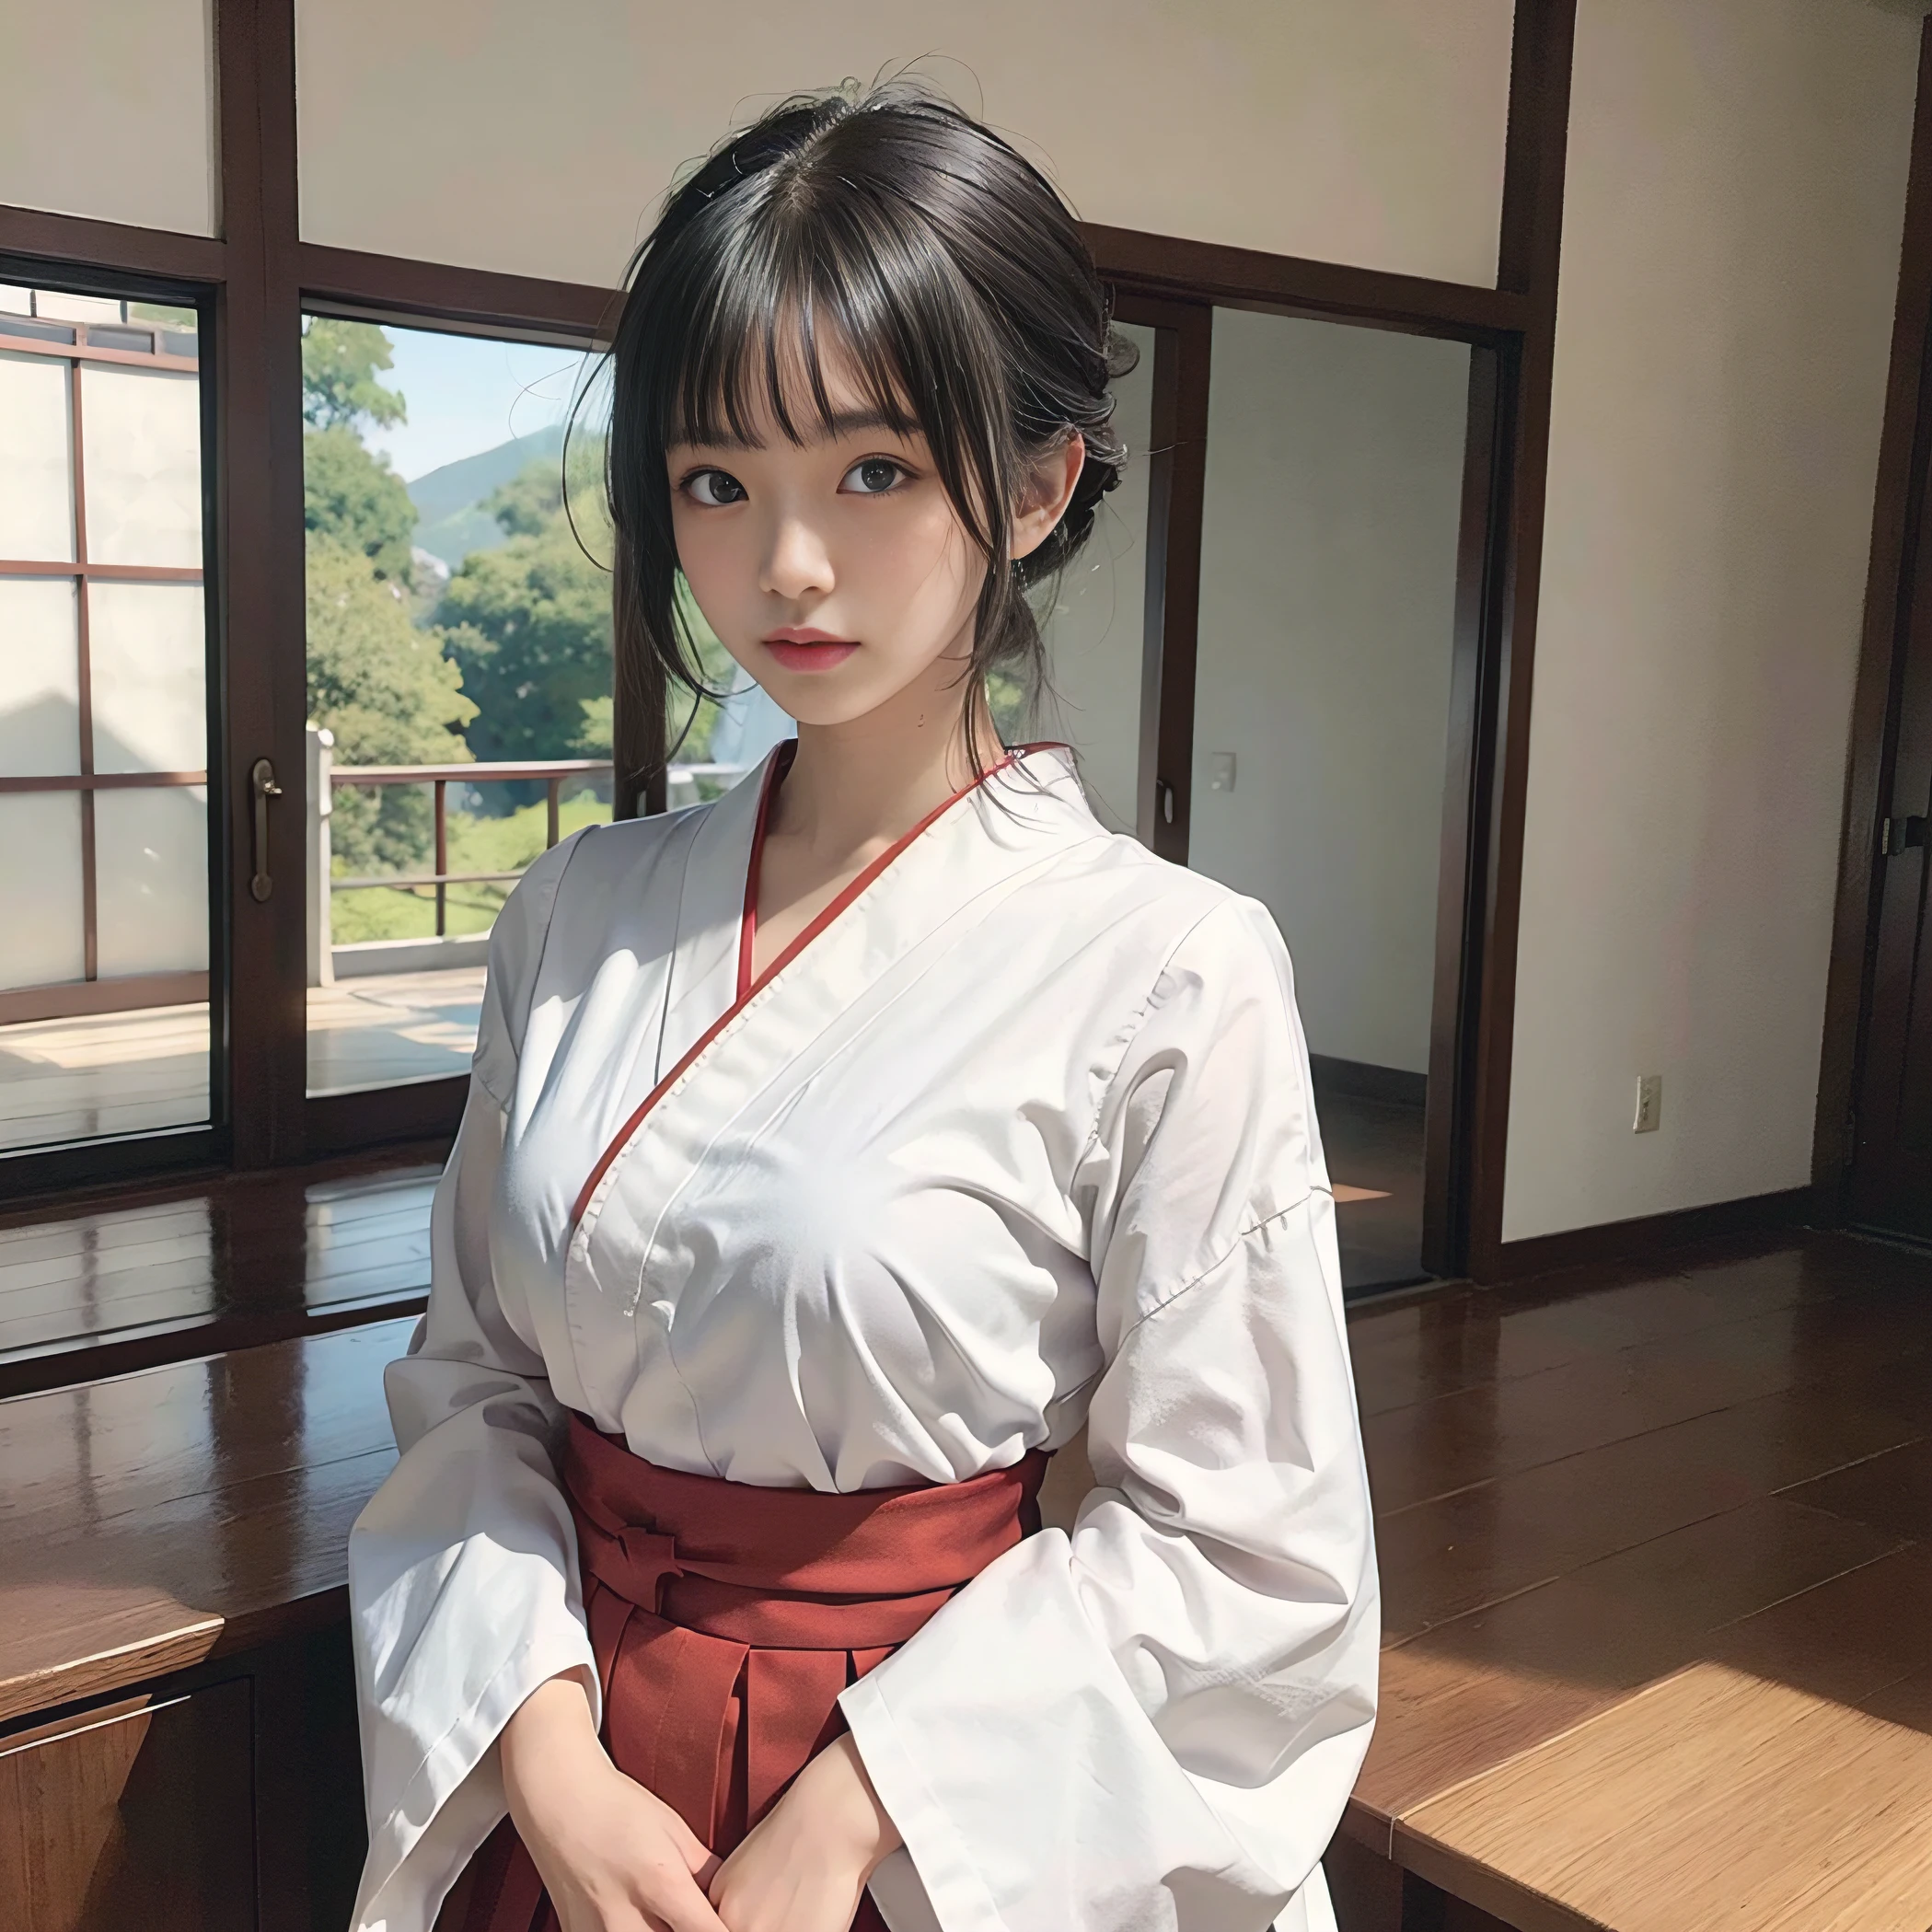 clockpunk hakama princess, white hime cut hairstyle, | Stable Diffusion